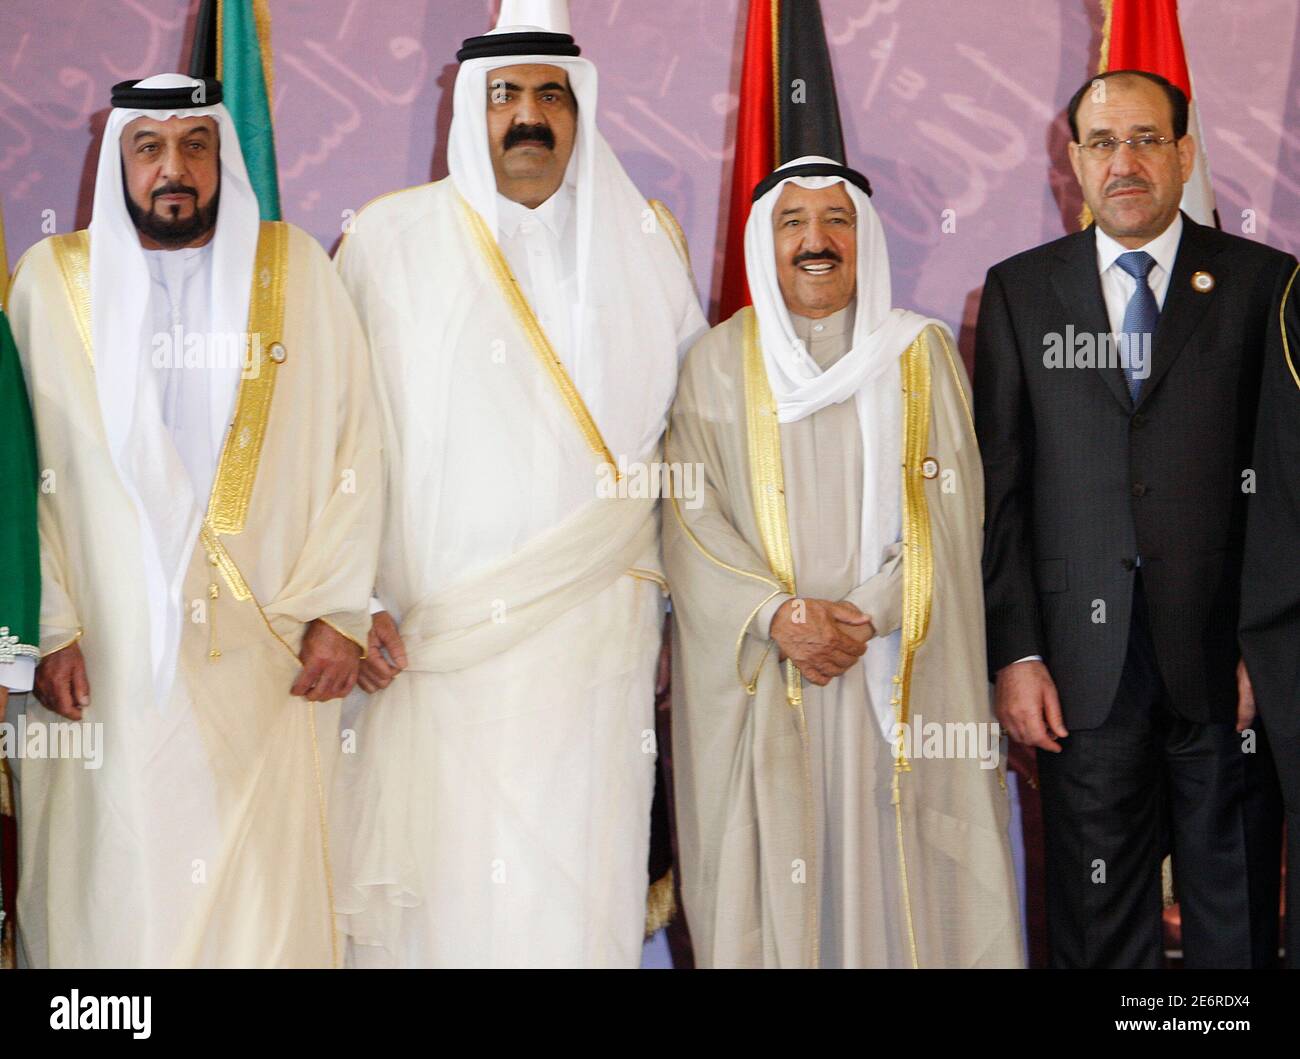 Khalifa Bin Zayed Al Nahayan High Resolution Stock Photography and Images -  Alamy